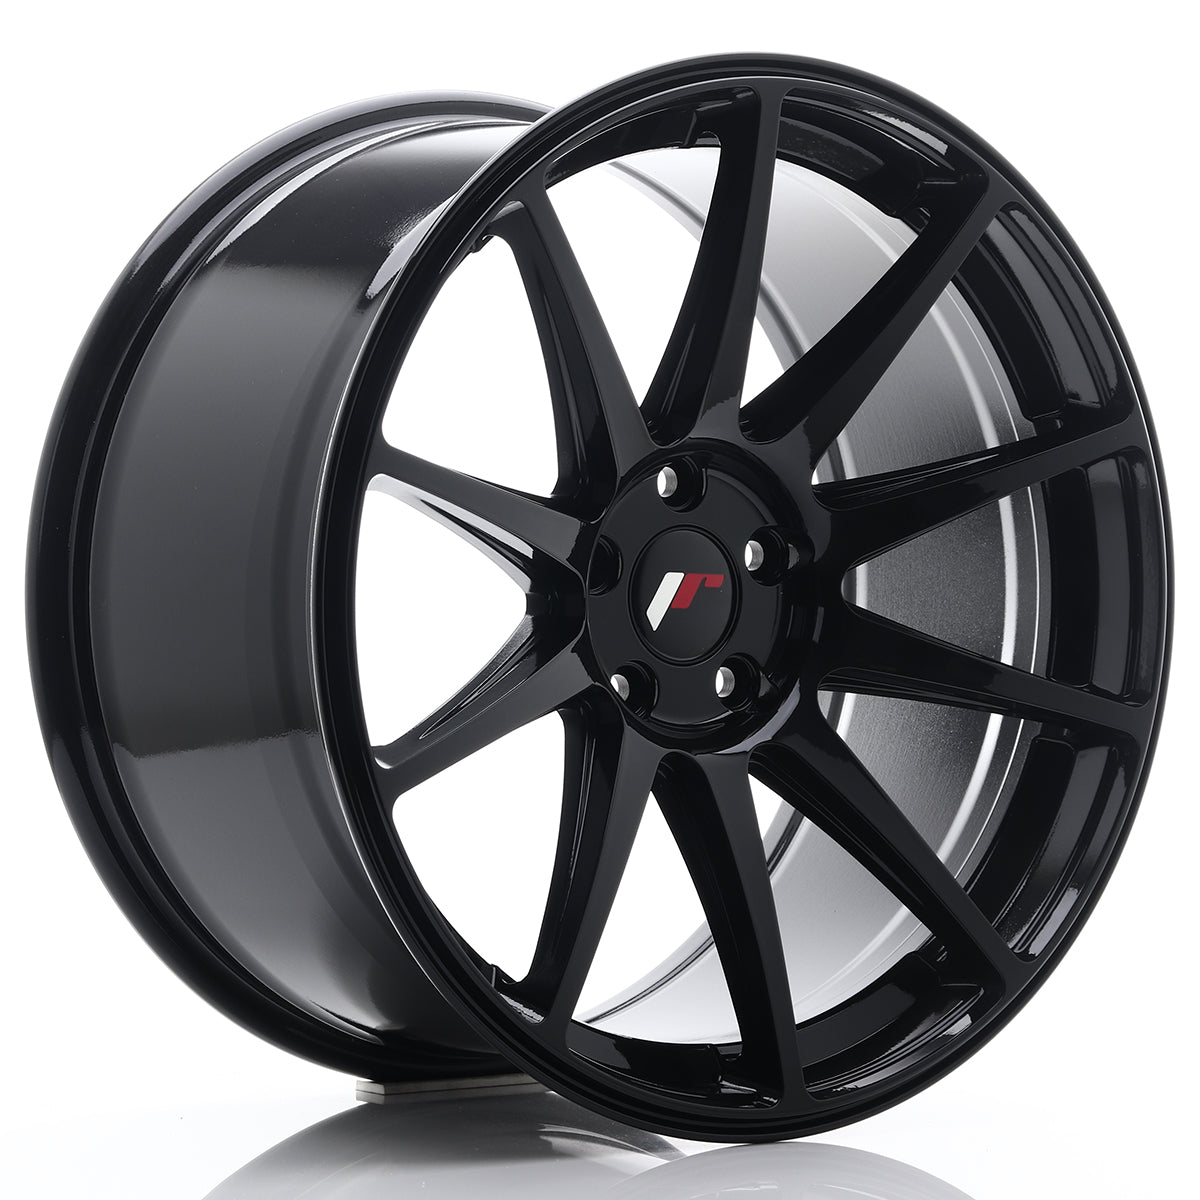 JR Wheels JR11 19x9,5 ET35 5x120 Glossy Black